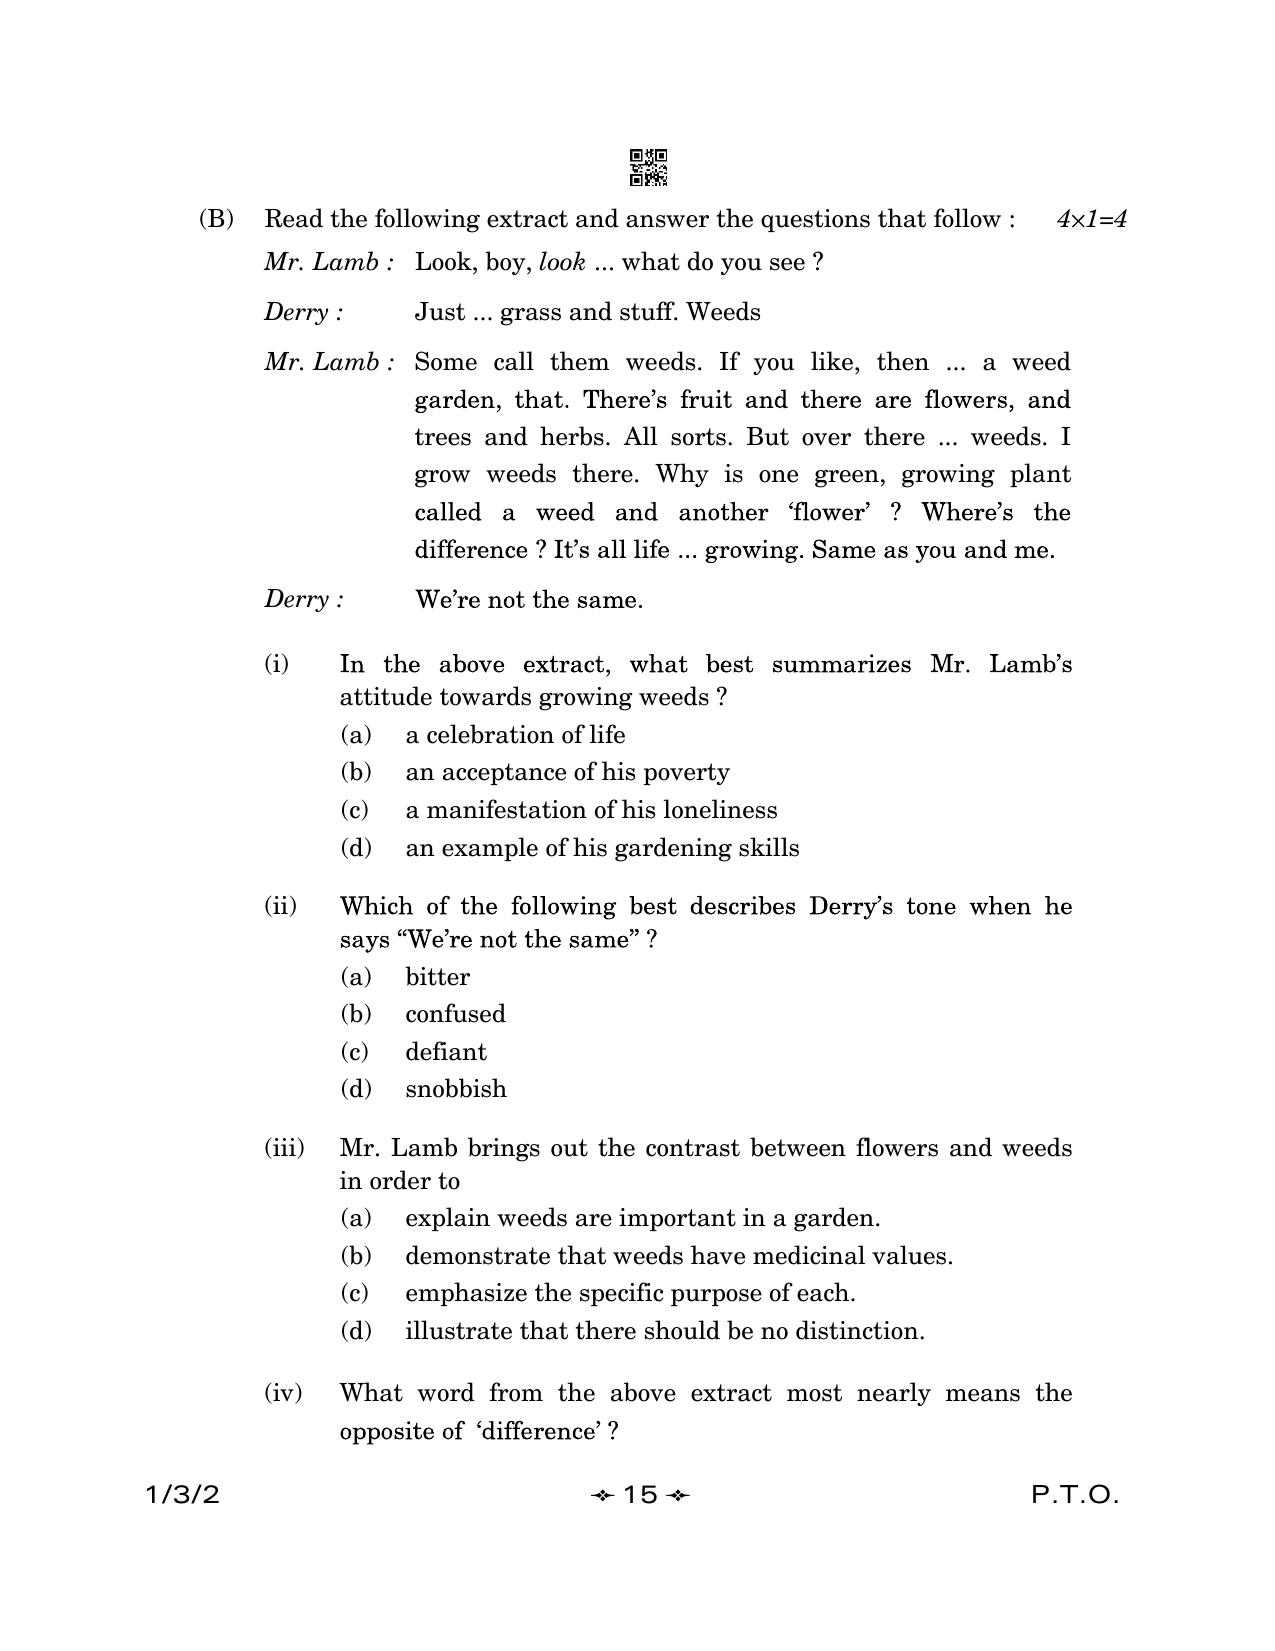 CBSE Class 12 1-3-2 English Core 2023 Question Paper - Page 15